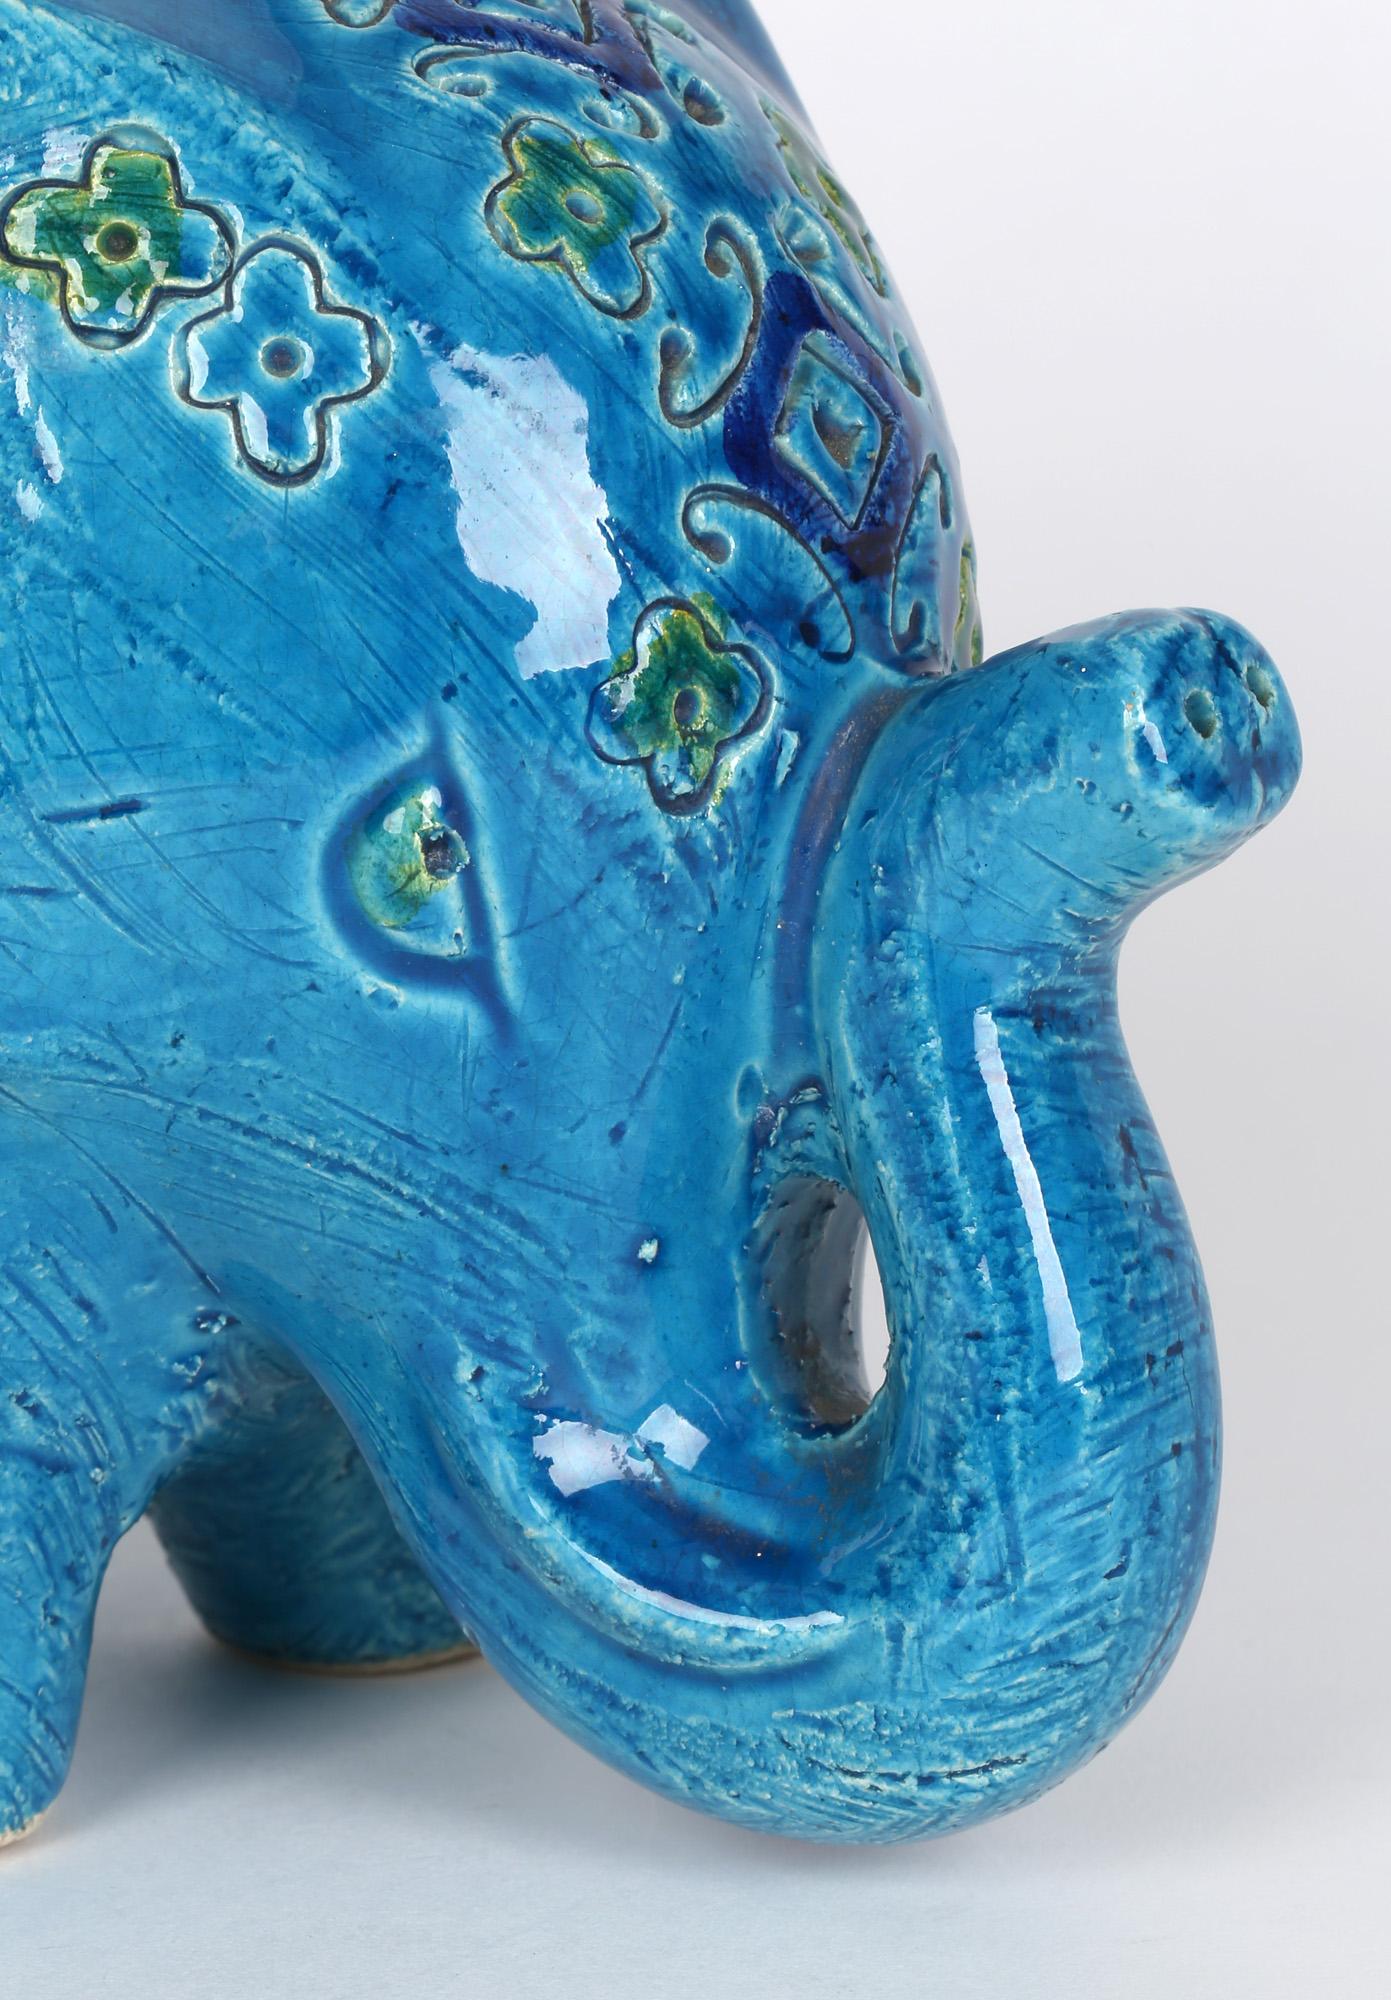 Aldo Londi Italian Bitossi Rimini Blu Stylized Pottery Elephant Figure 5